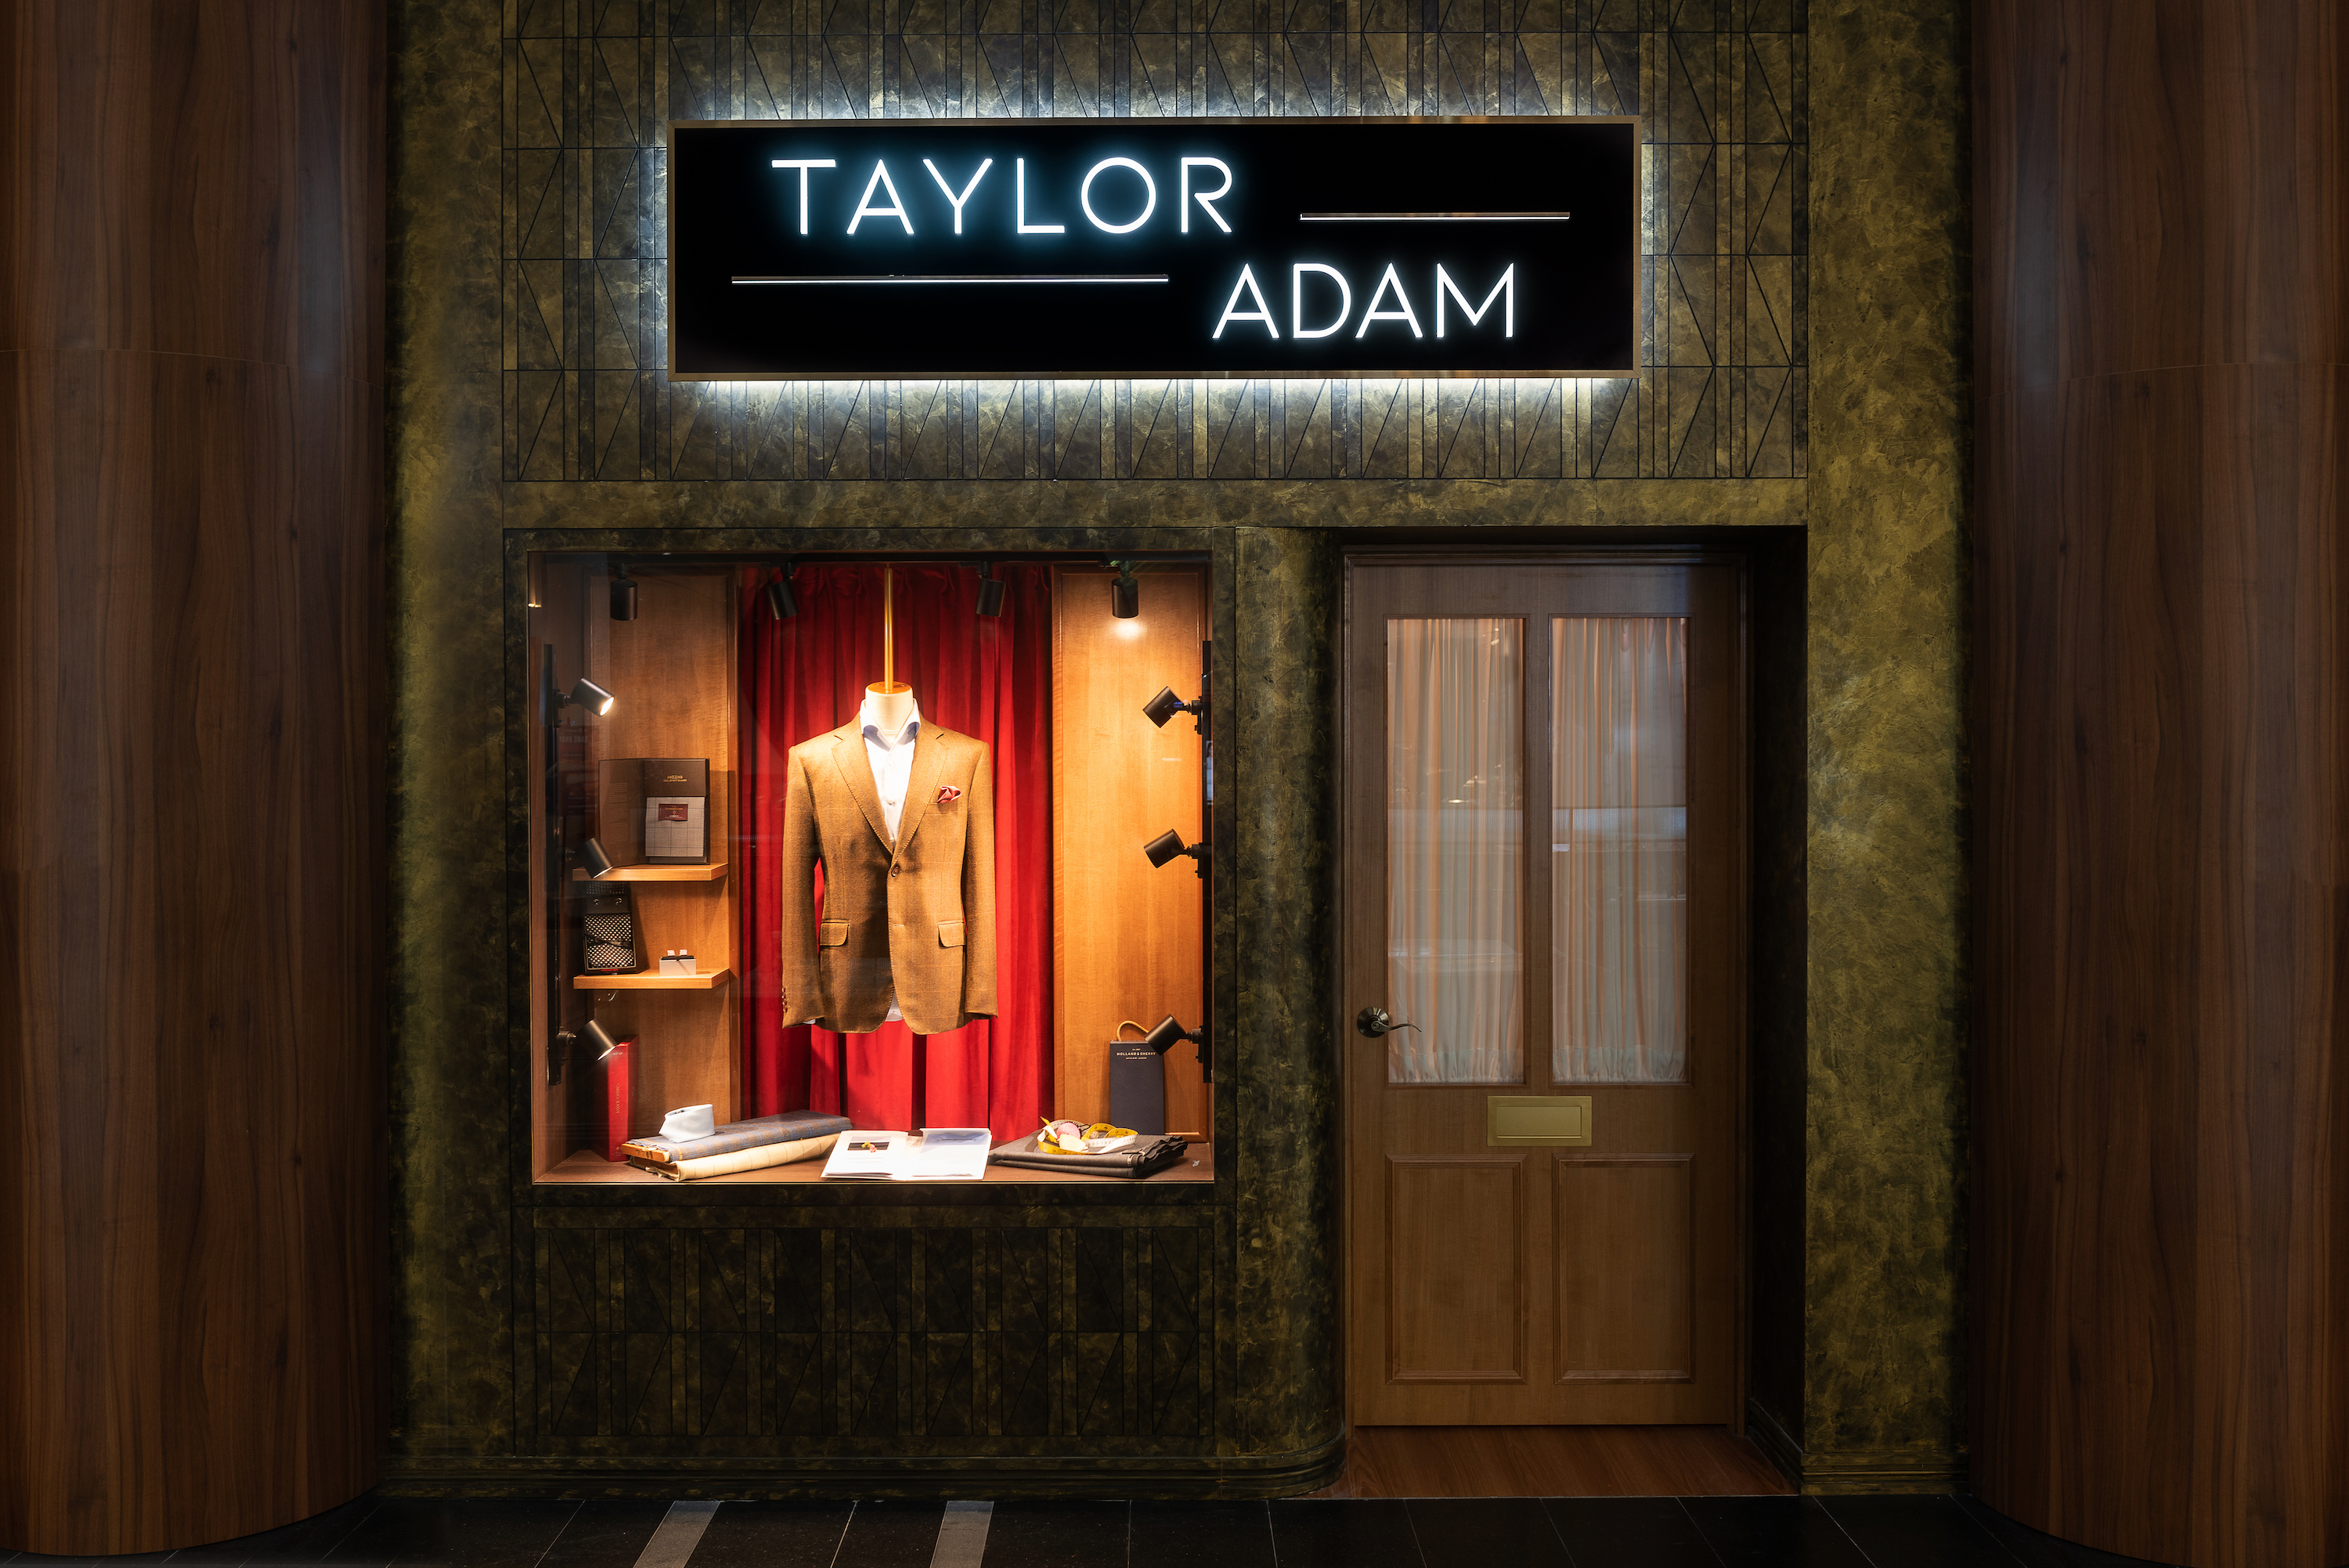 Taylor Adam, a cocktail bar hidden behind the entrance of a tailor